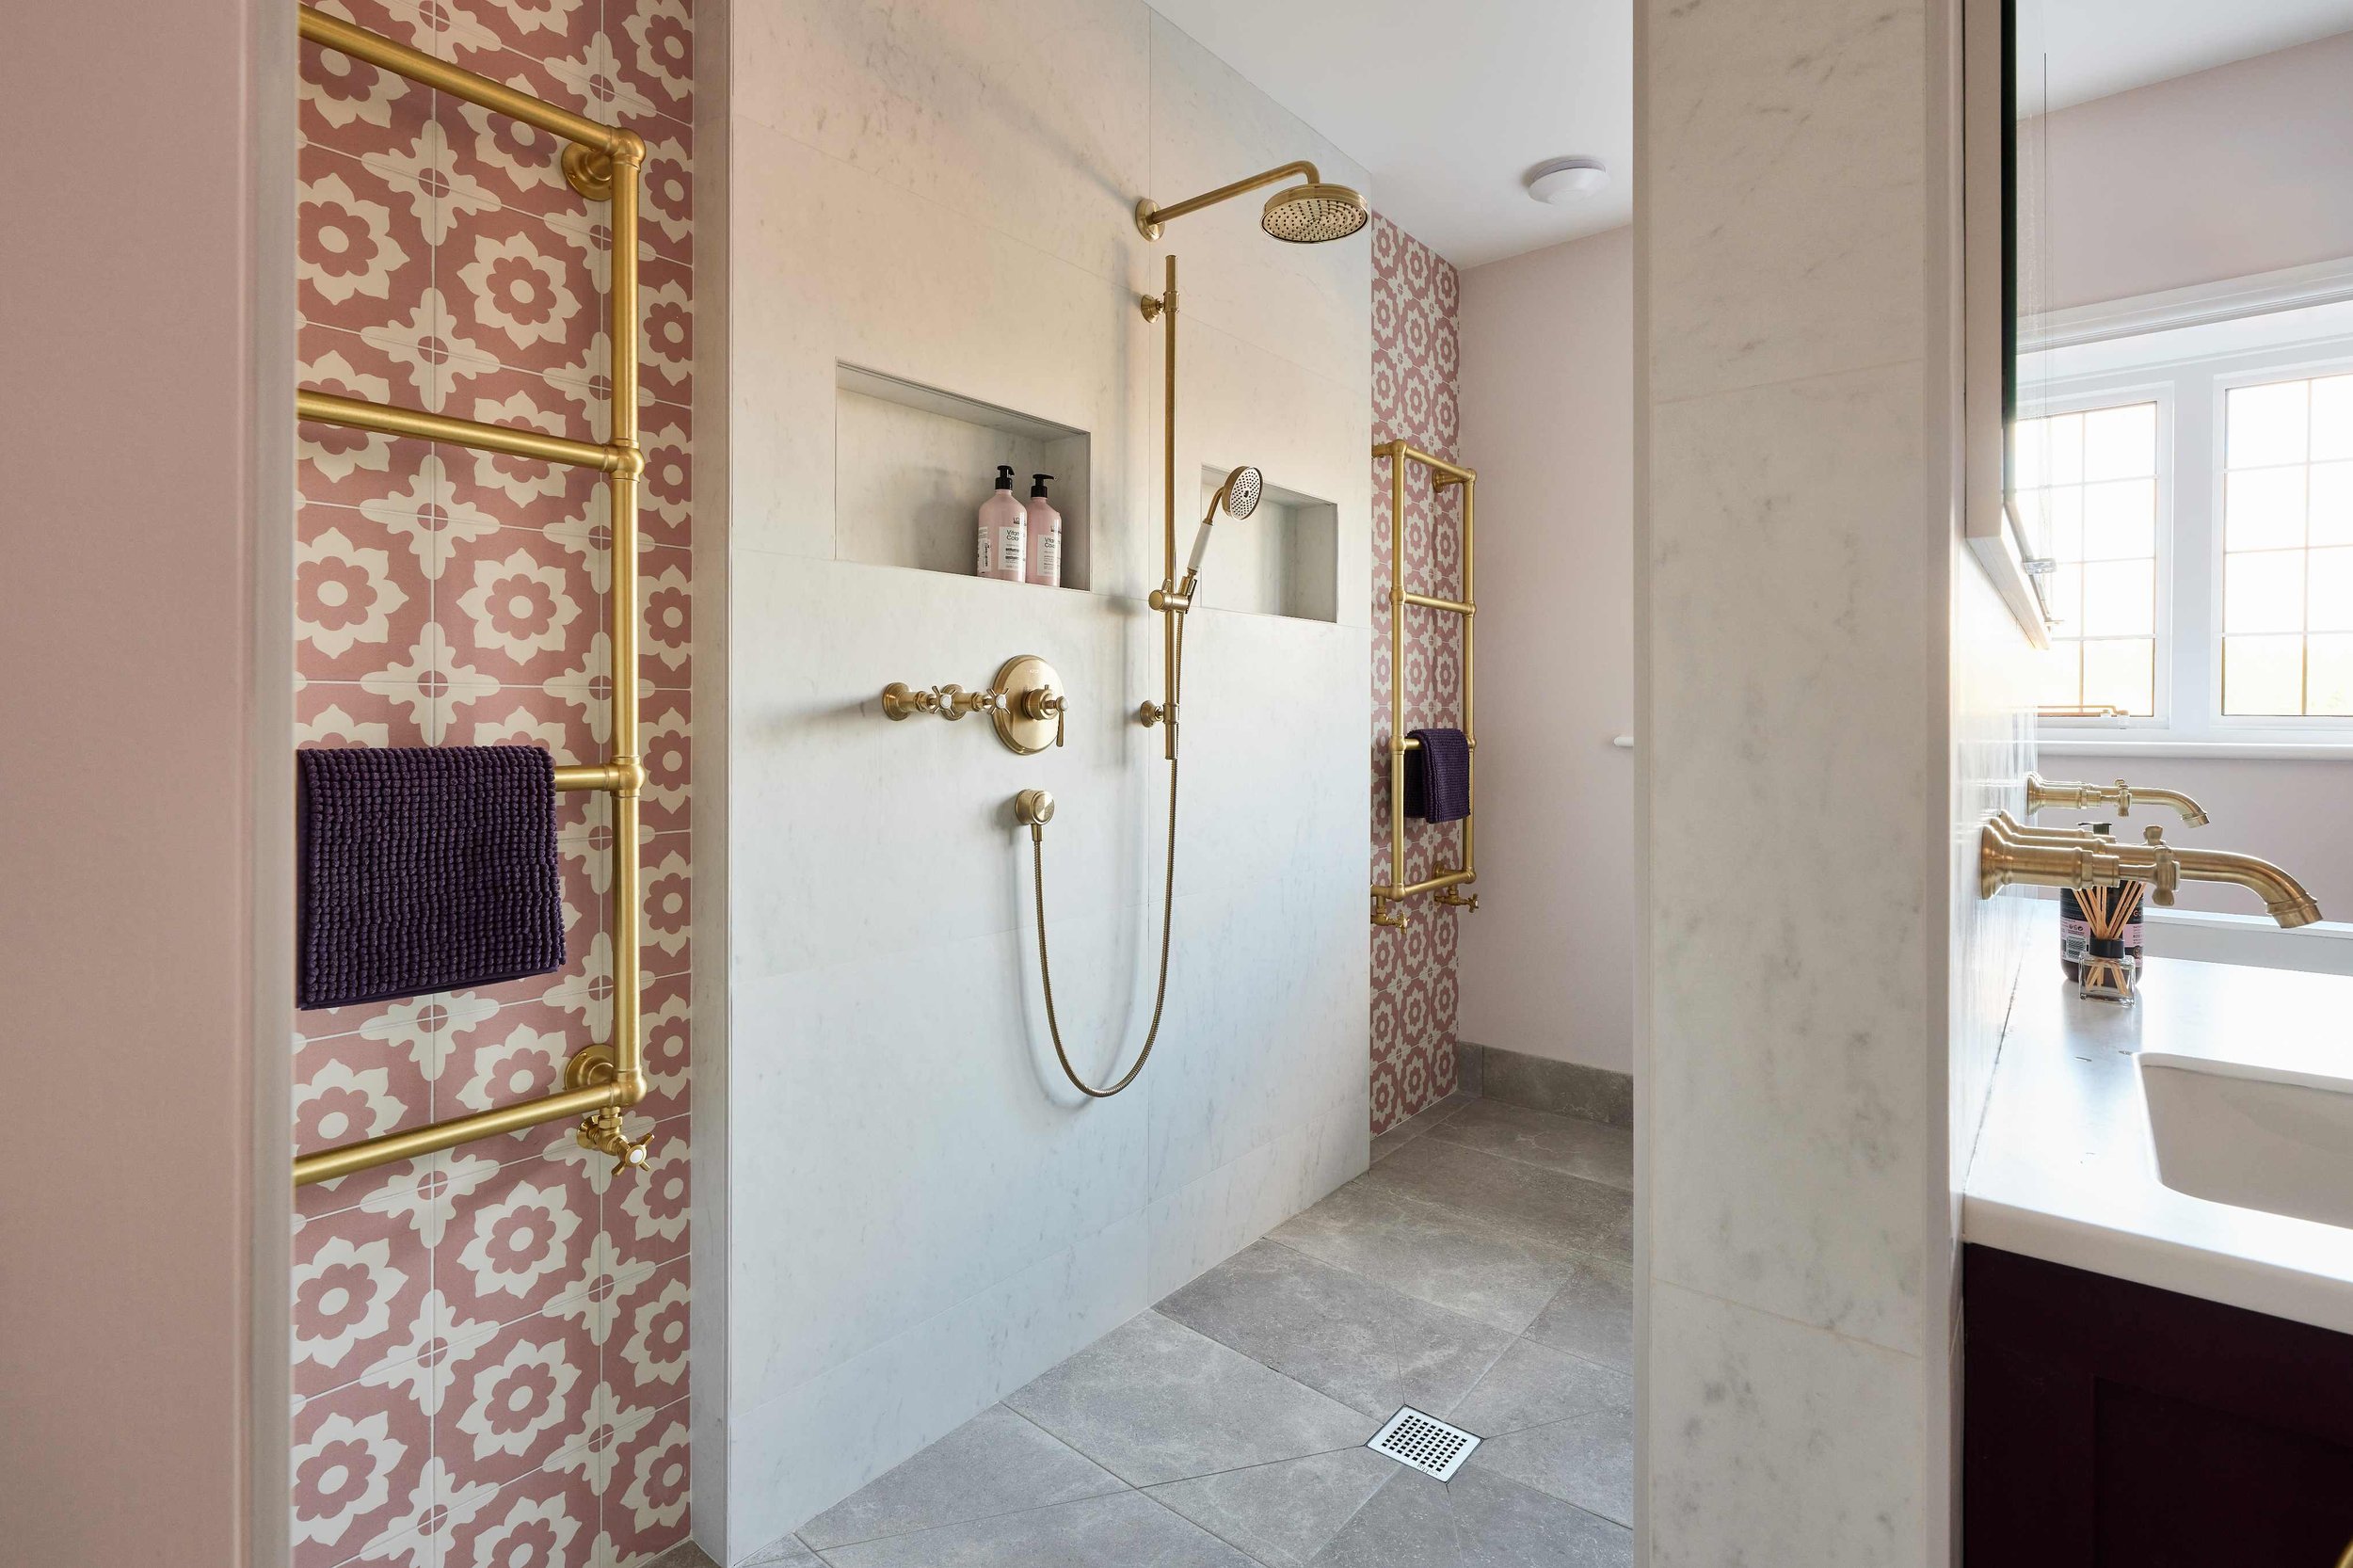 ripples-shower-room-with-floral-tile.jpg